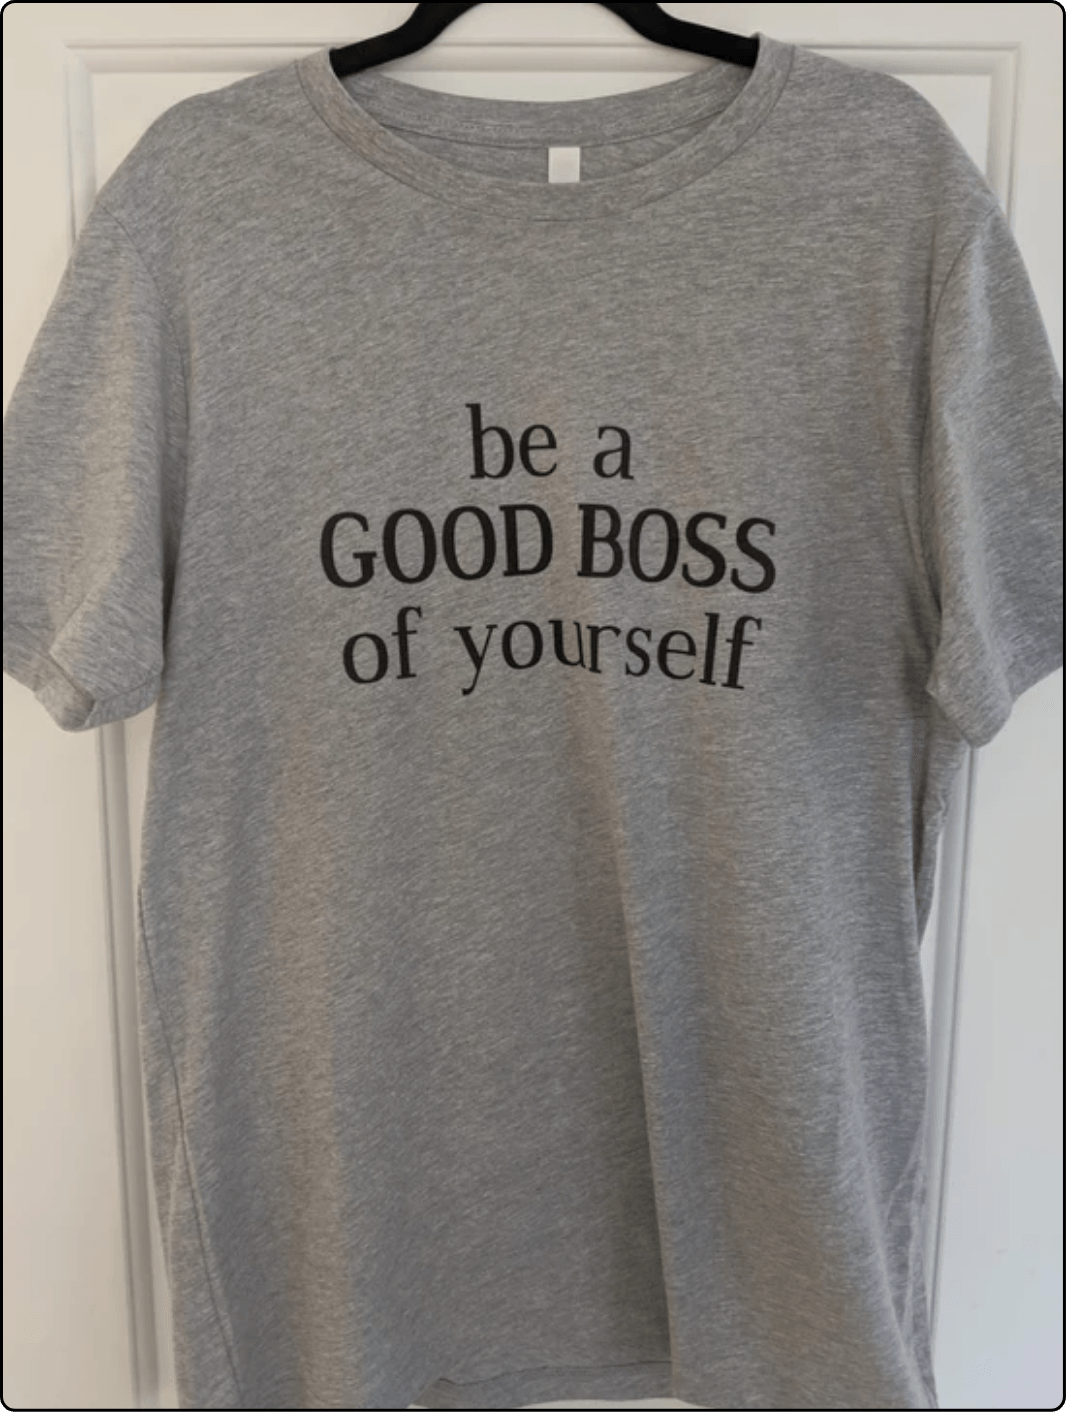 “Be a GOOD Boss” tshirt